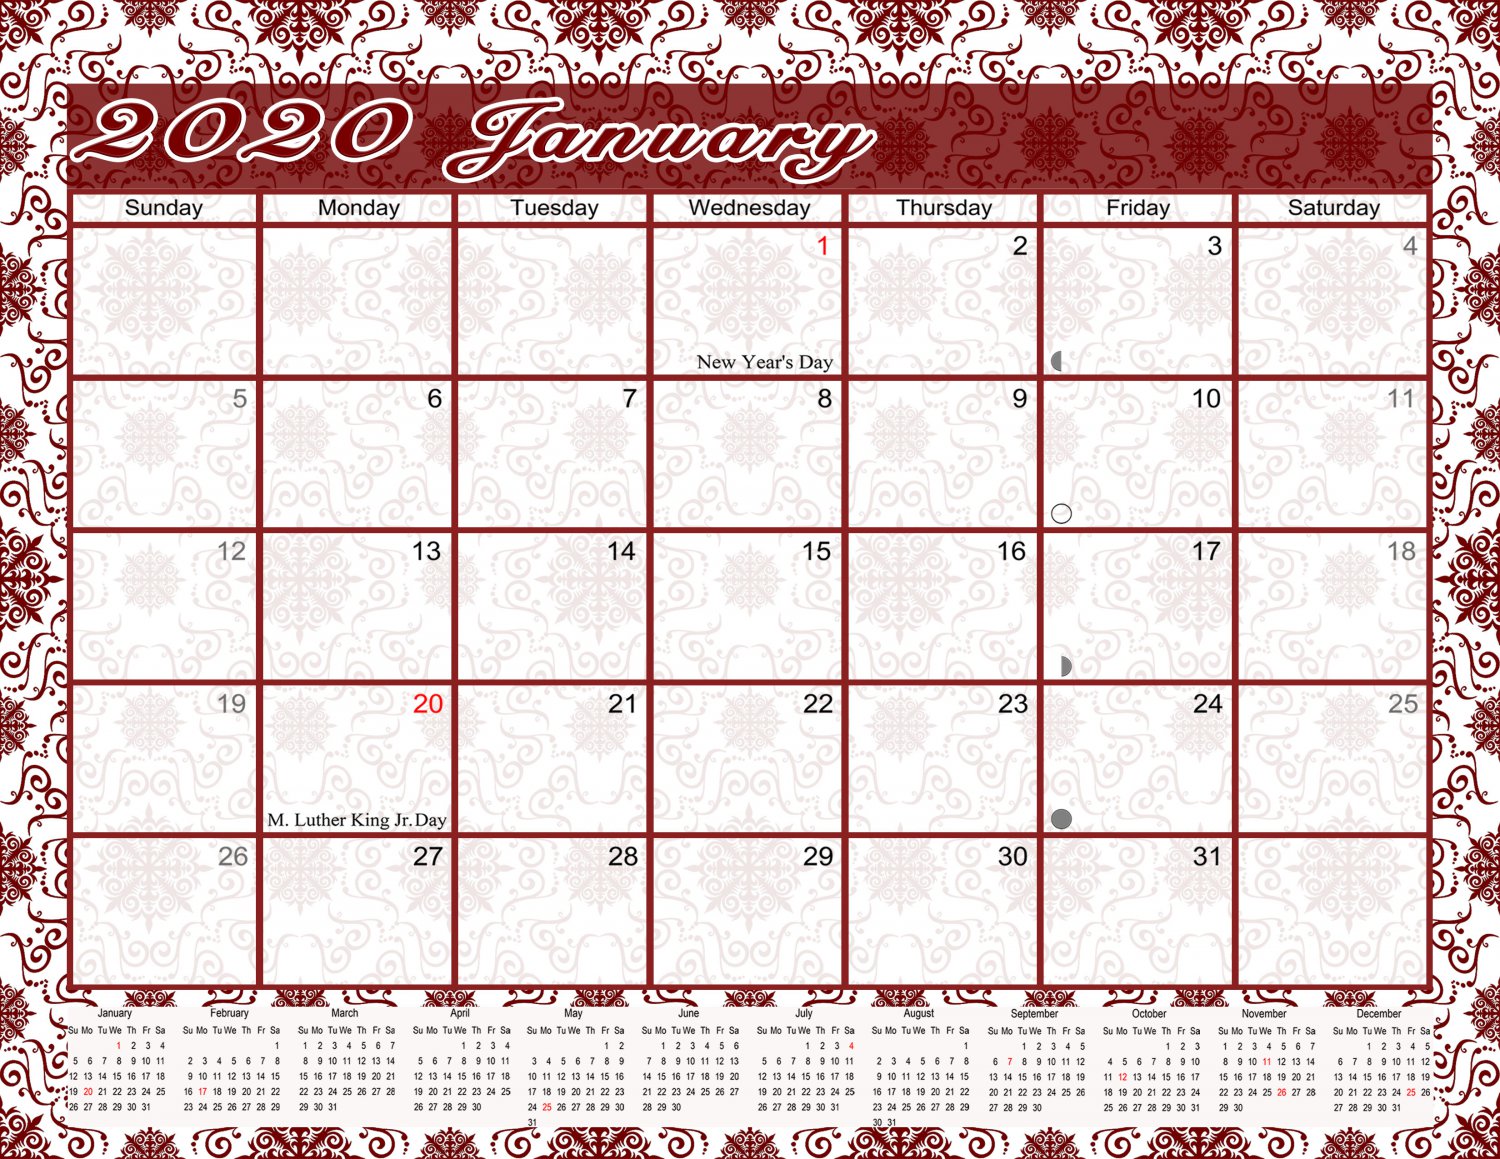 2020 Monthly Magnetic/Desk Calendar - 12 Months Desktop/Wall Calendar/Planner - (Damask Edition #16)